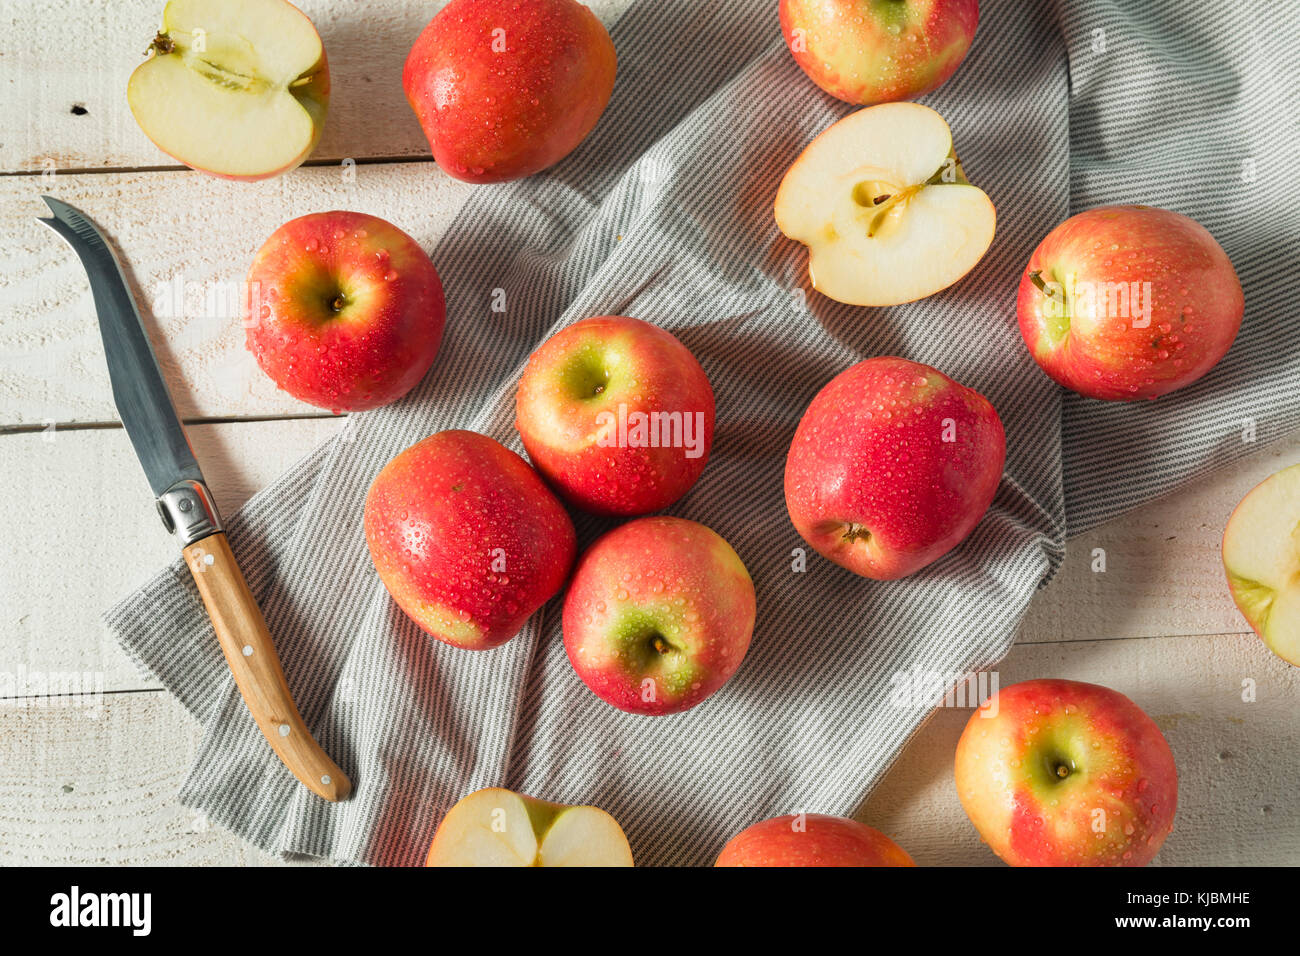 https://c8.alamy.com/comp/KJBMHE/raw-red-organic-pink-lady-apples-ready-to-eat-KJBMHE.jpg